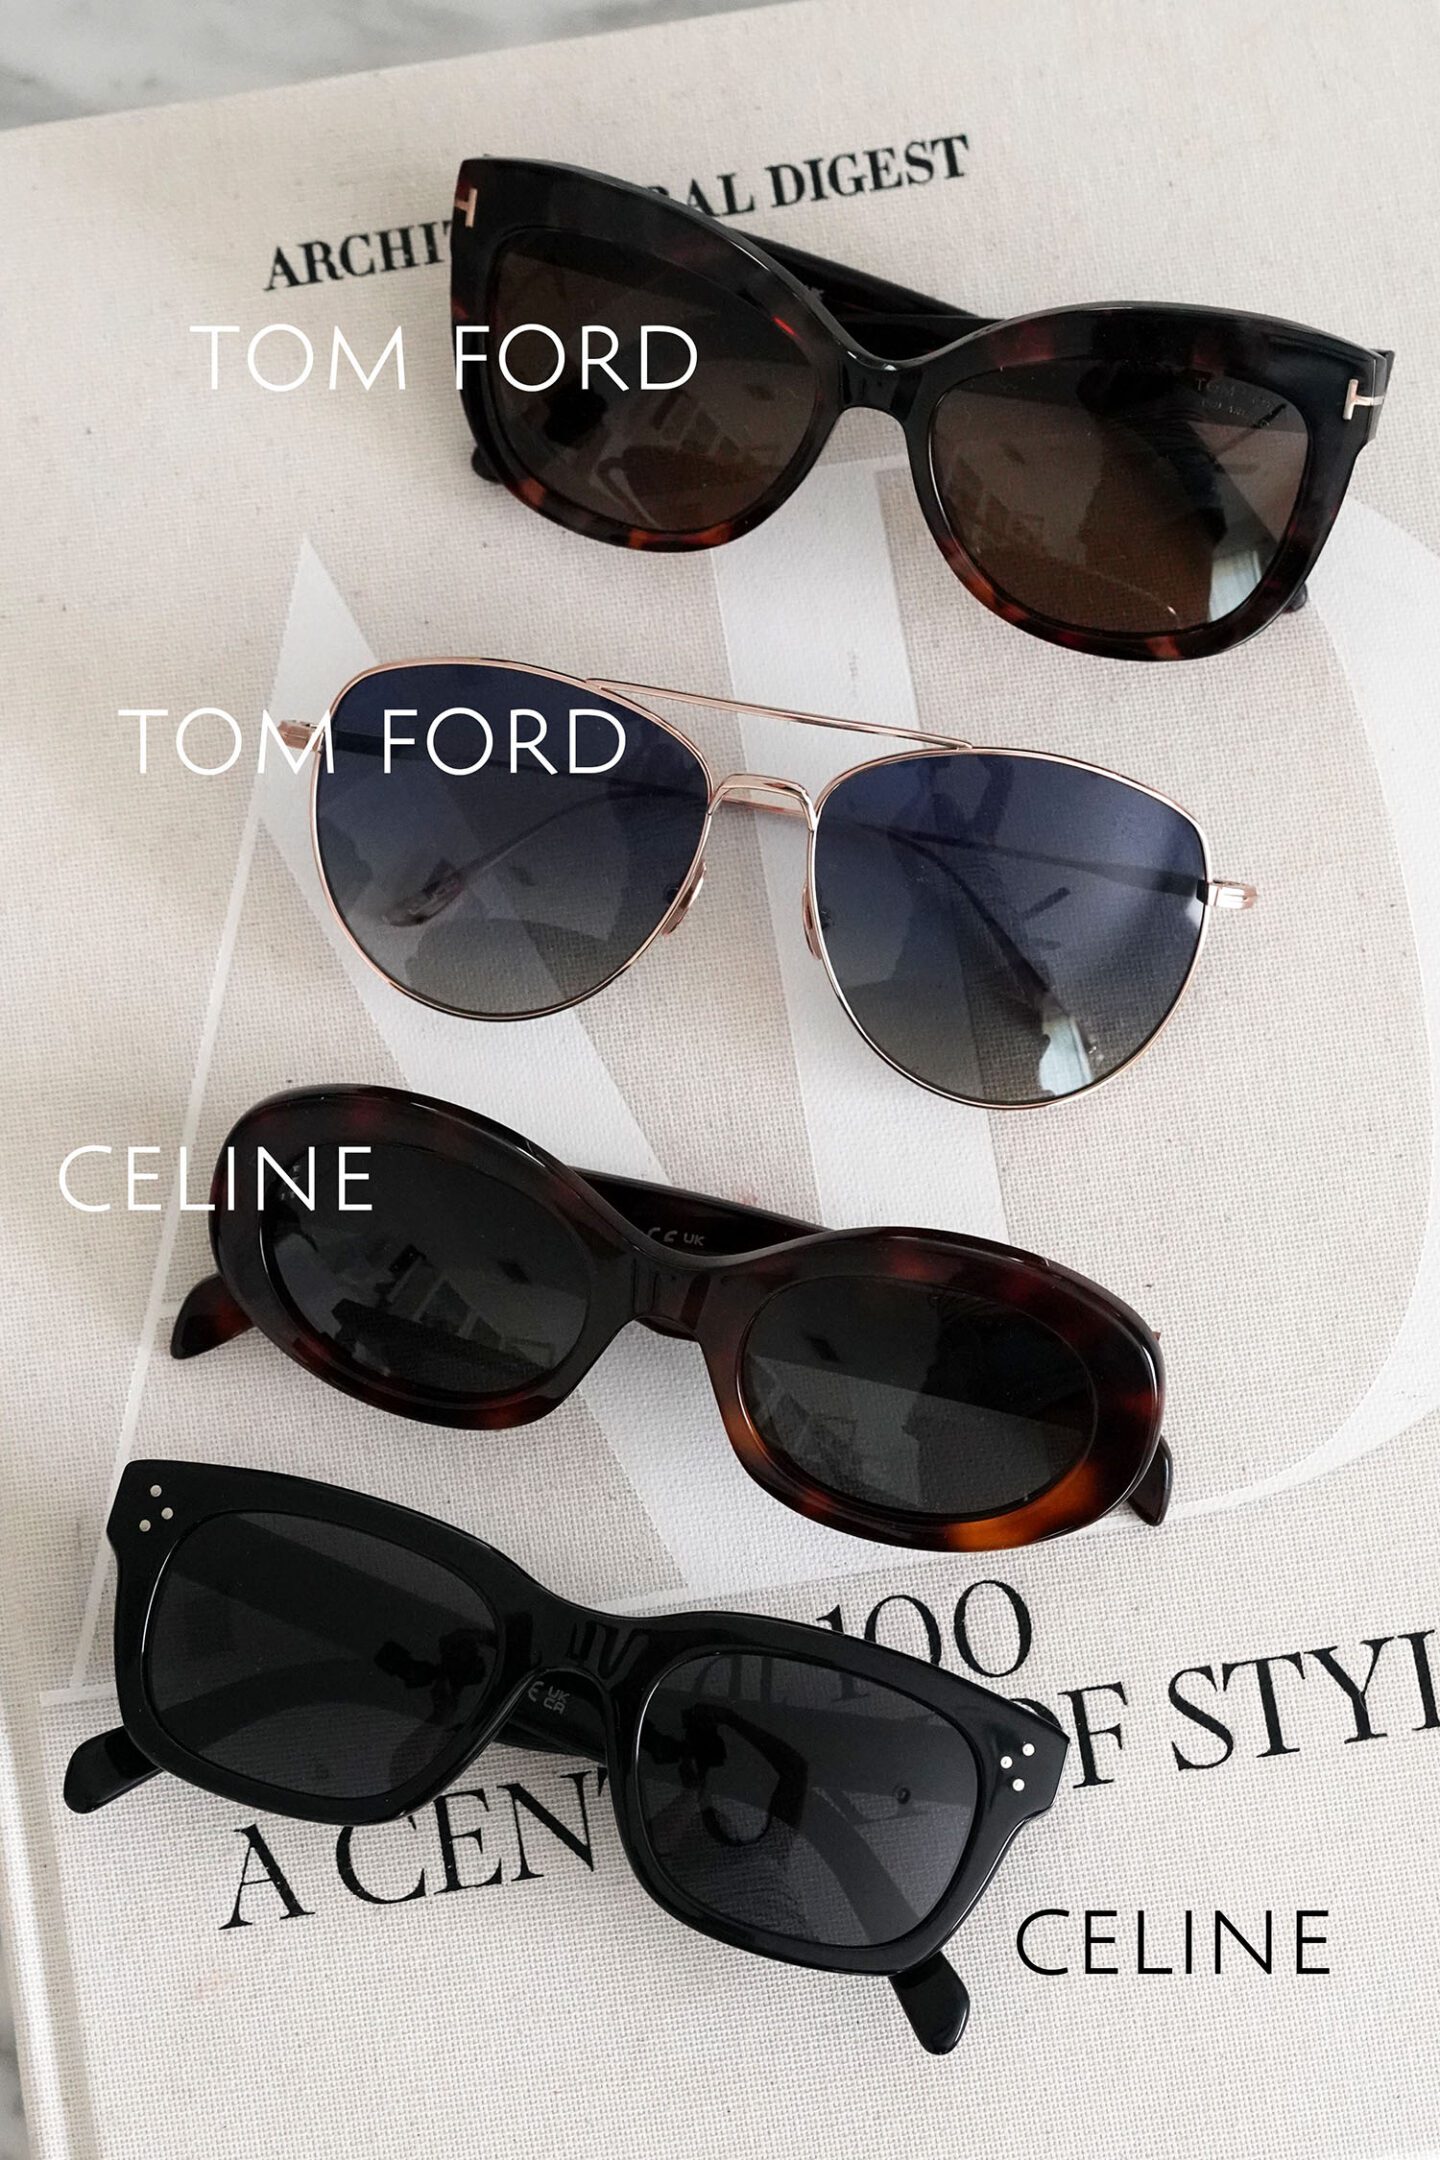 Favorite Sunglasses Tom Ford and Celine